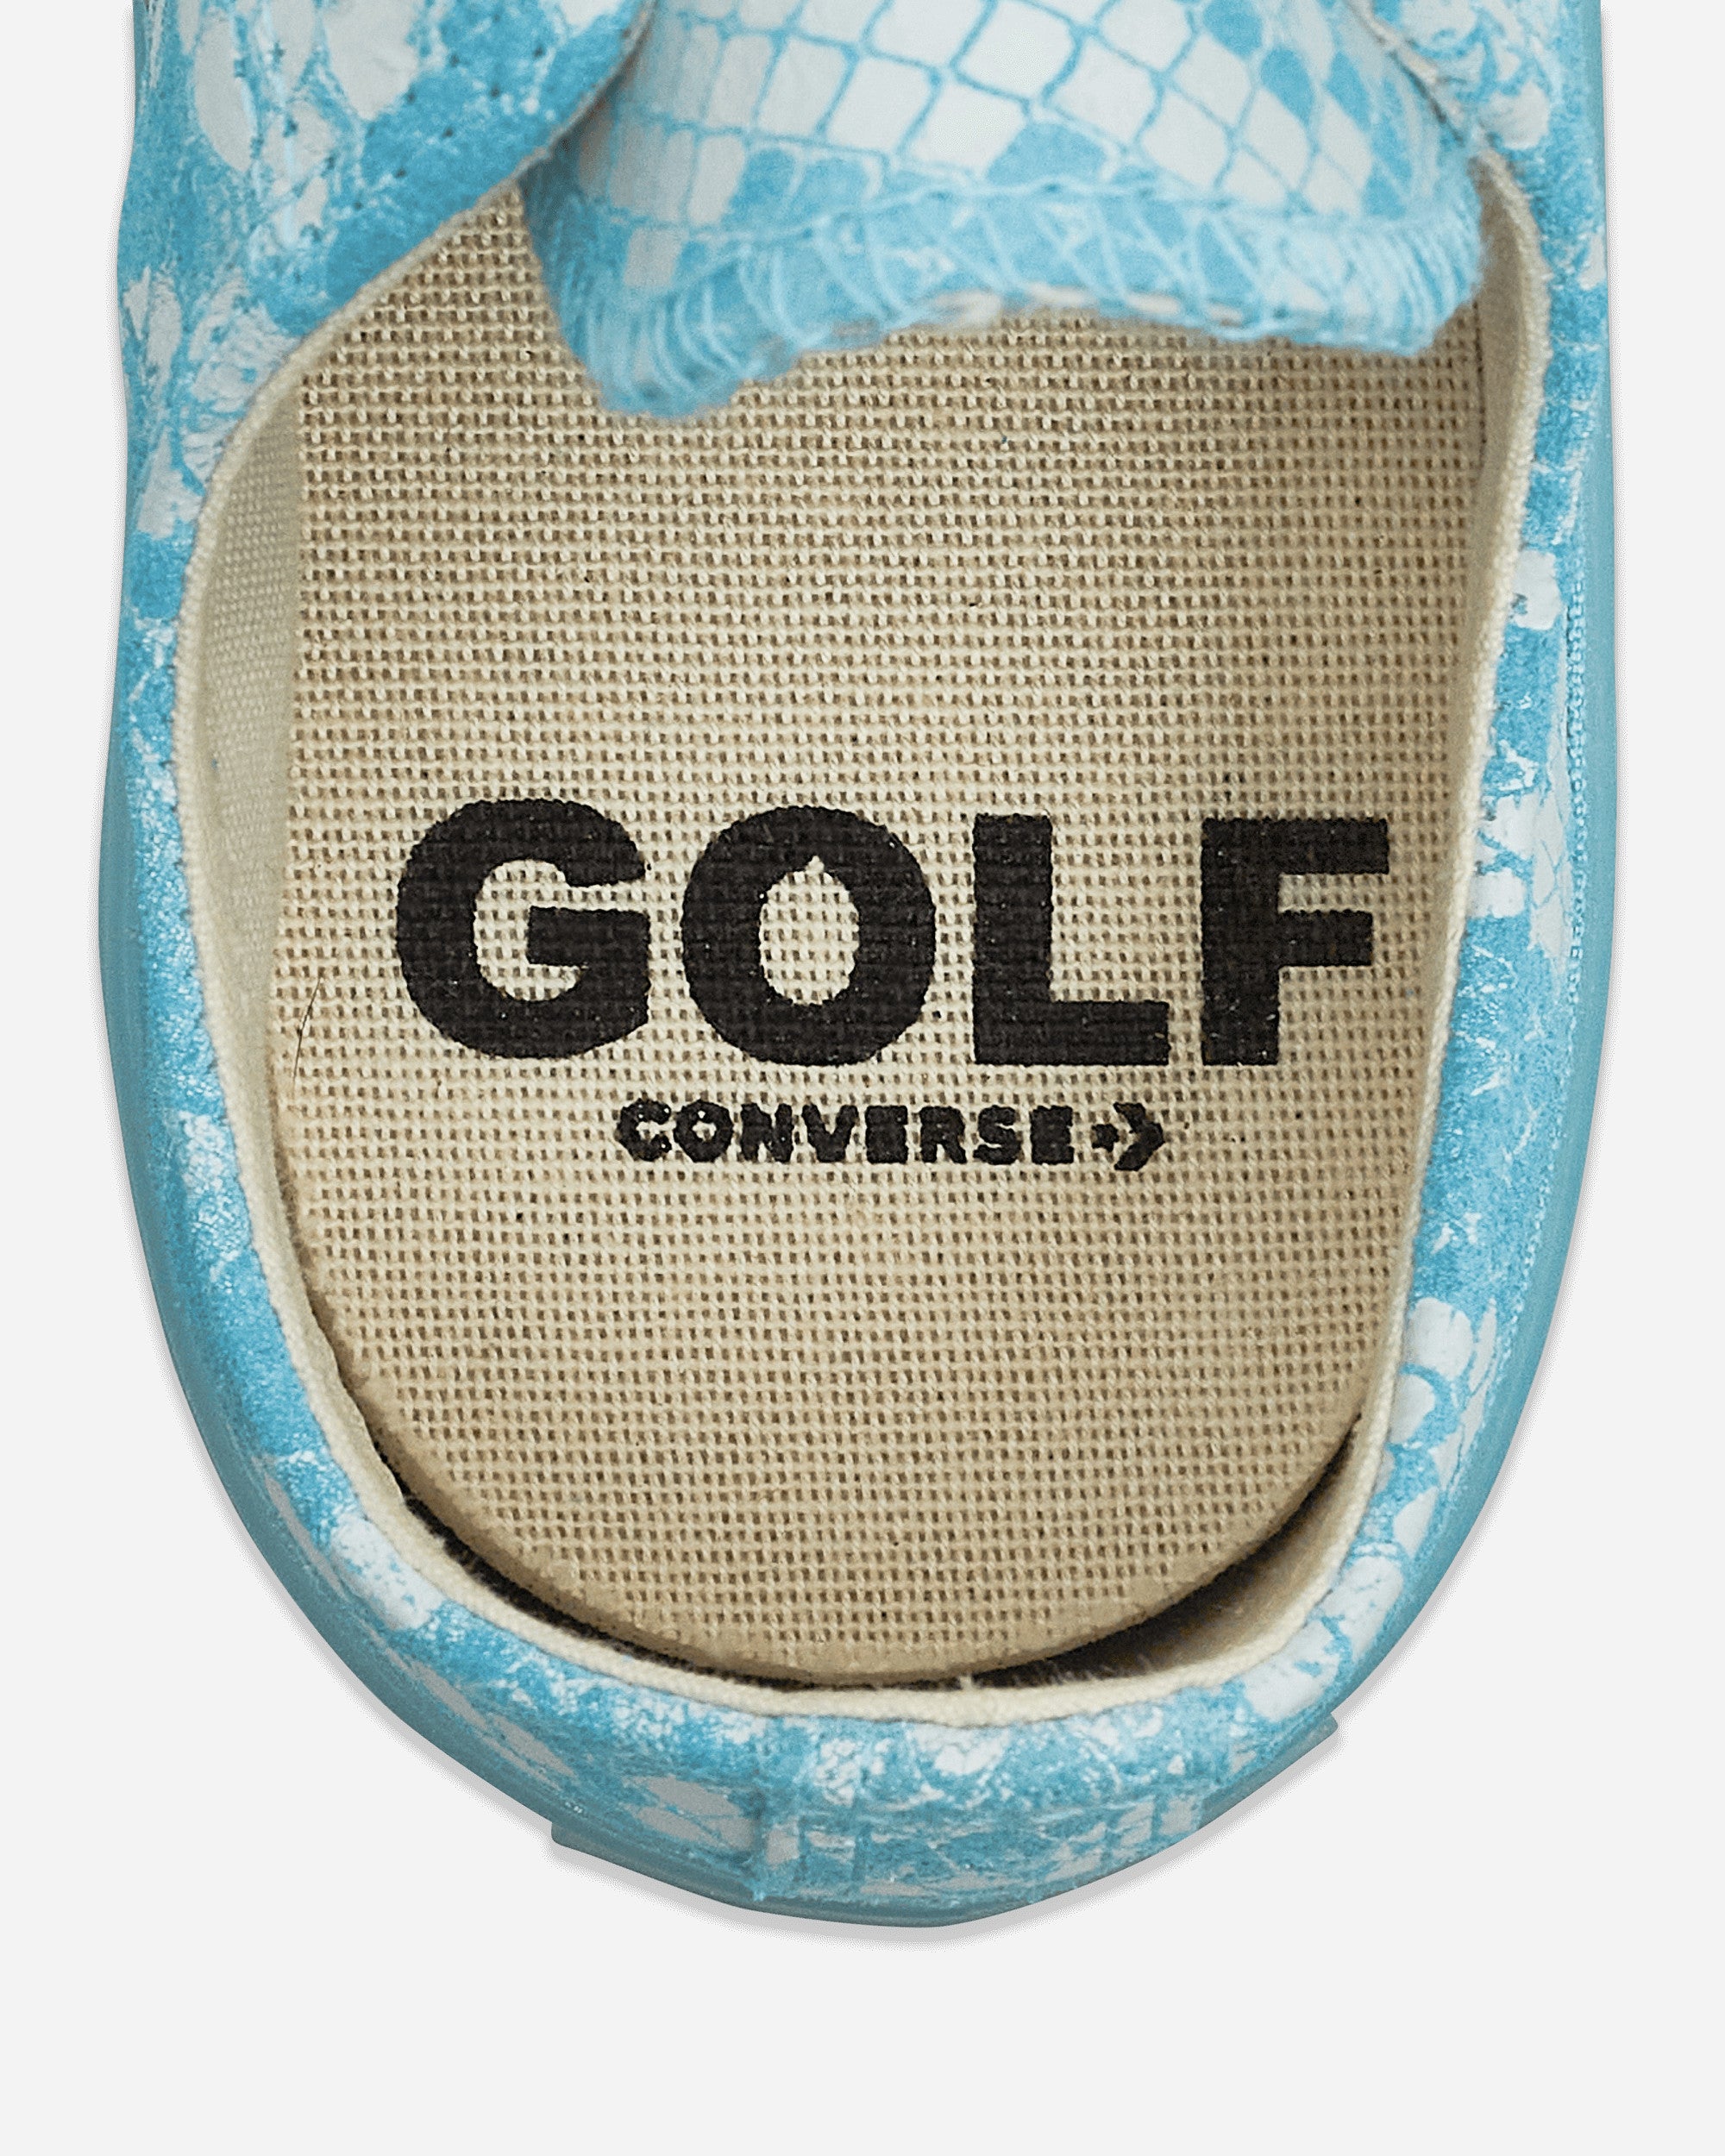 Converse Converse X Glf Wang White/Azure Sneakers Low G42194